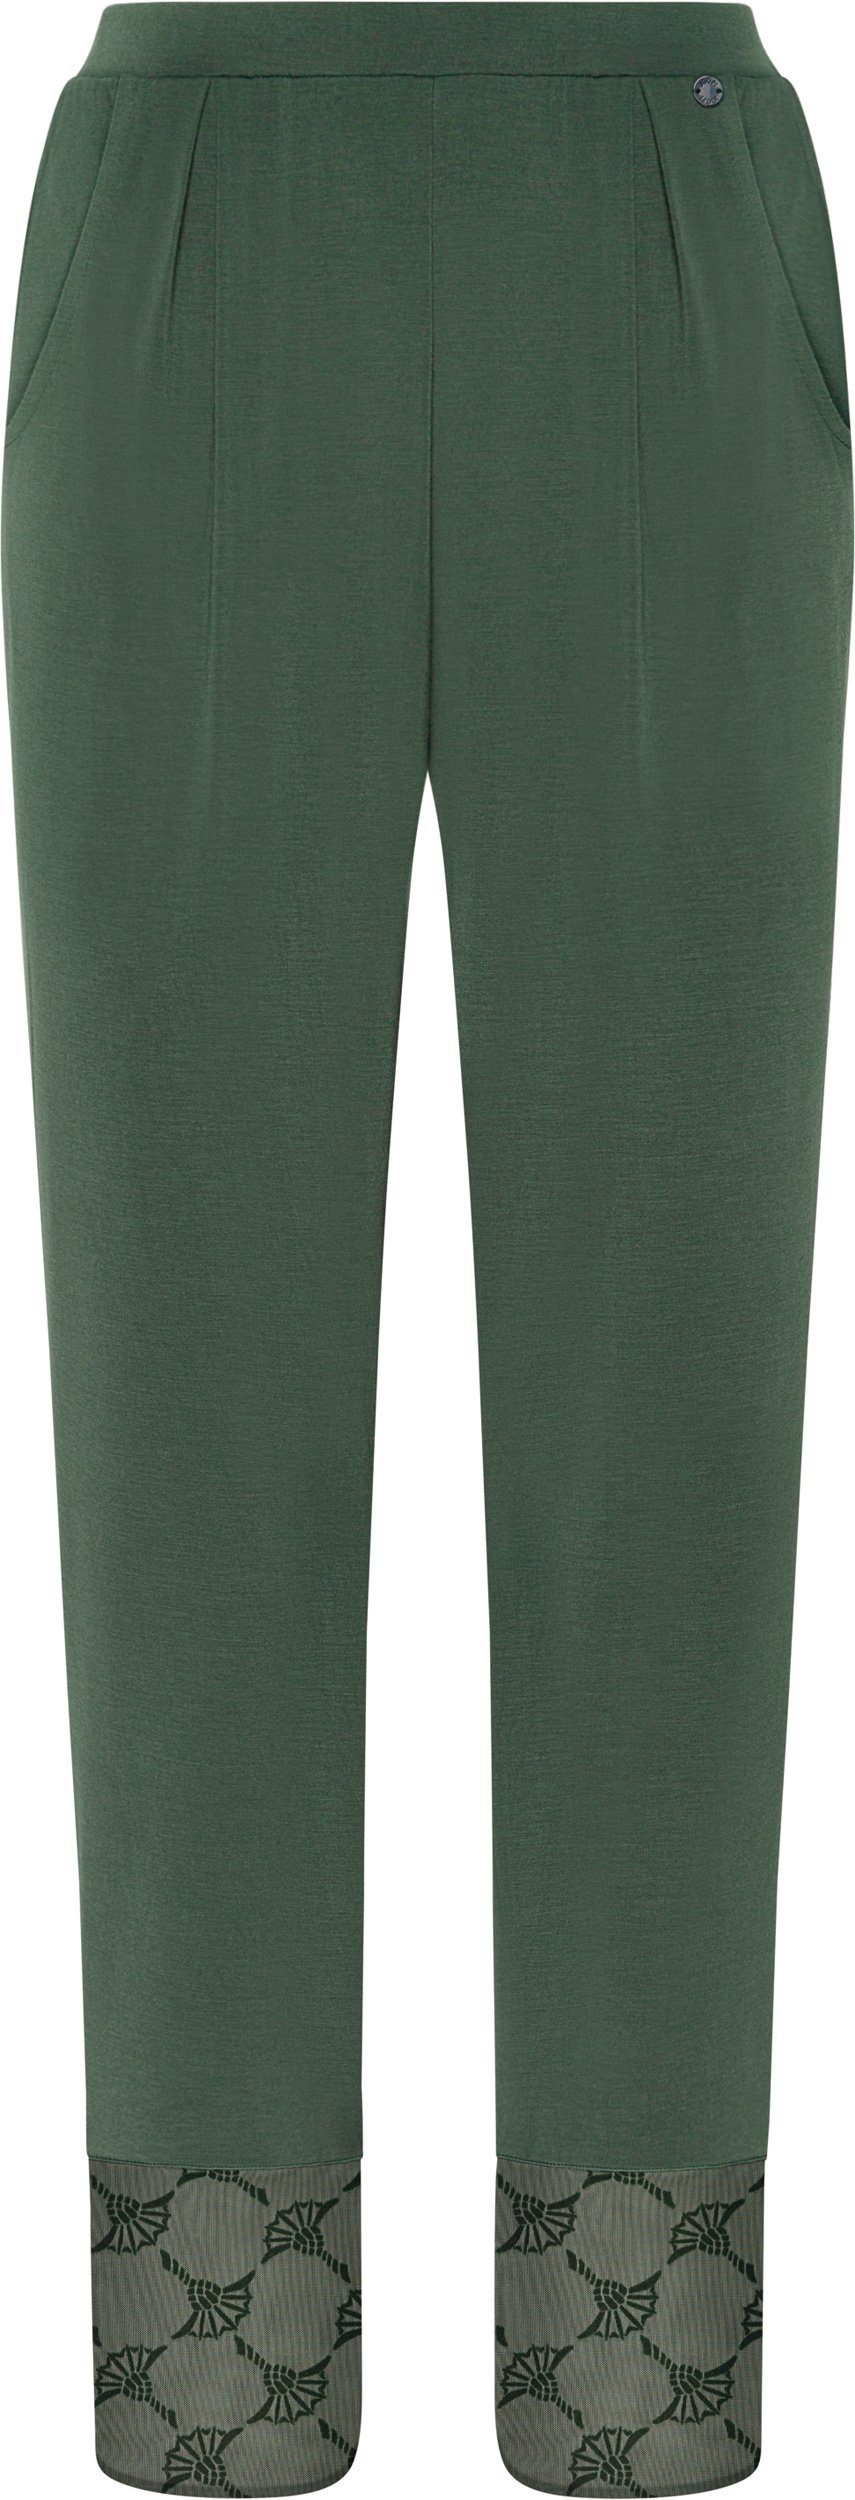 Sheer 644097 Hose Pyjamahose Luxury green JOOP! JOOP! garden Bodywear